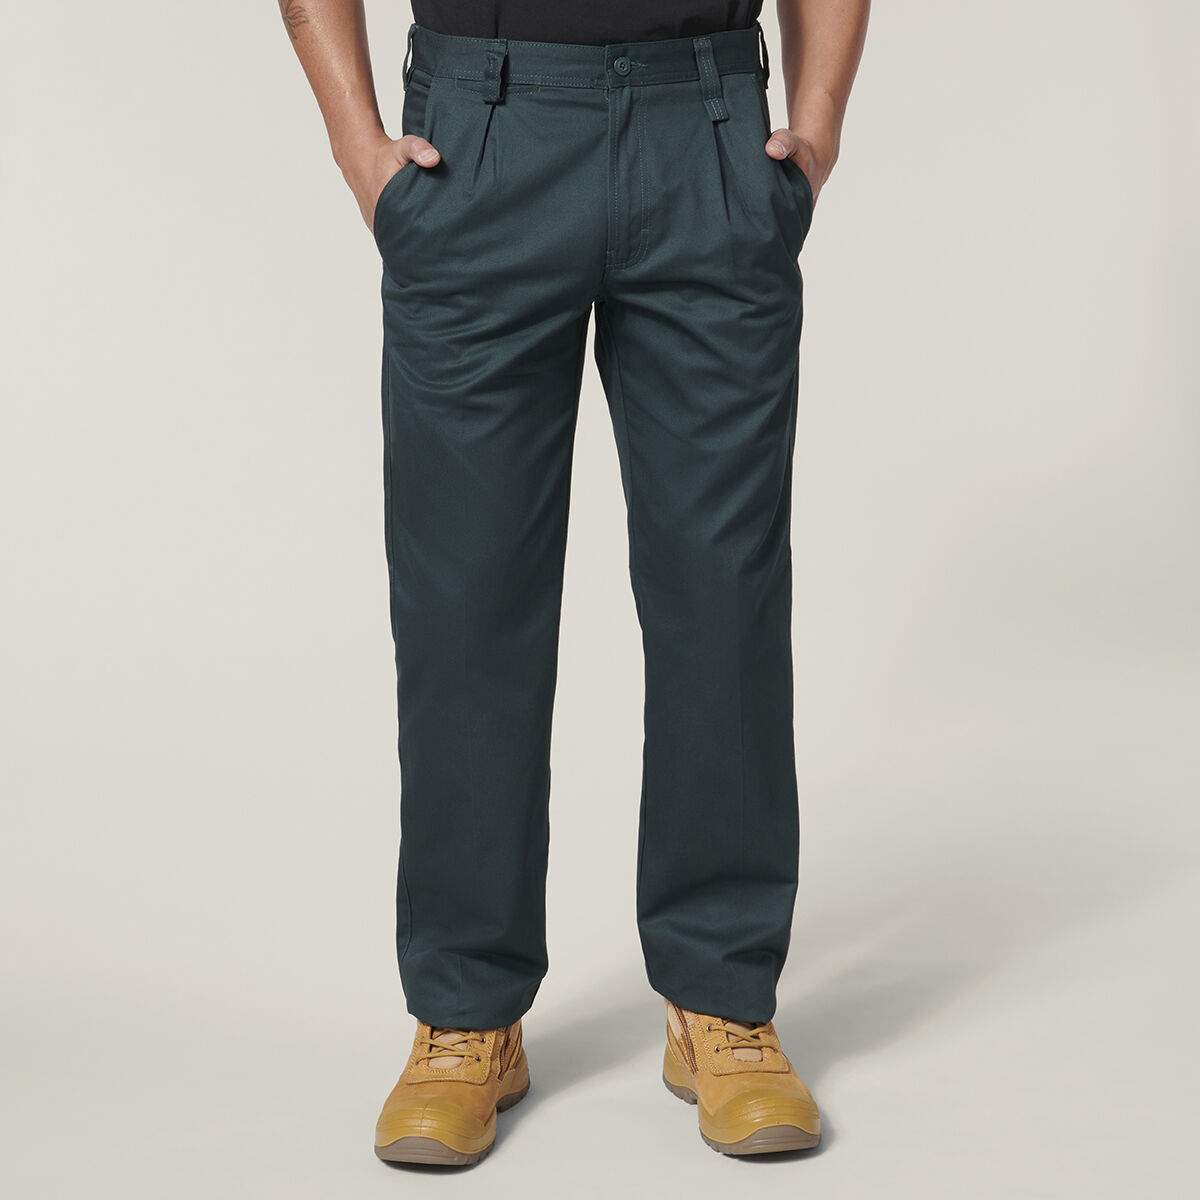 Fashion Long Cargo Pants Work Trousers @ Best Price Online | Jumia Kenya